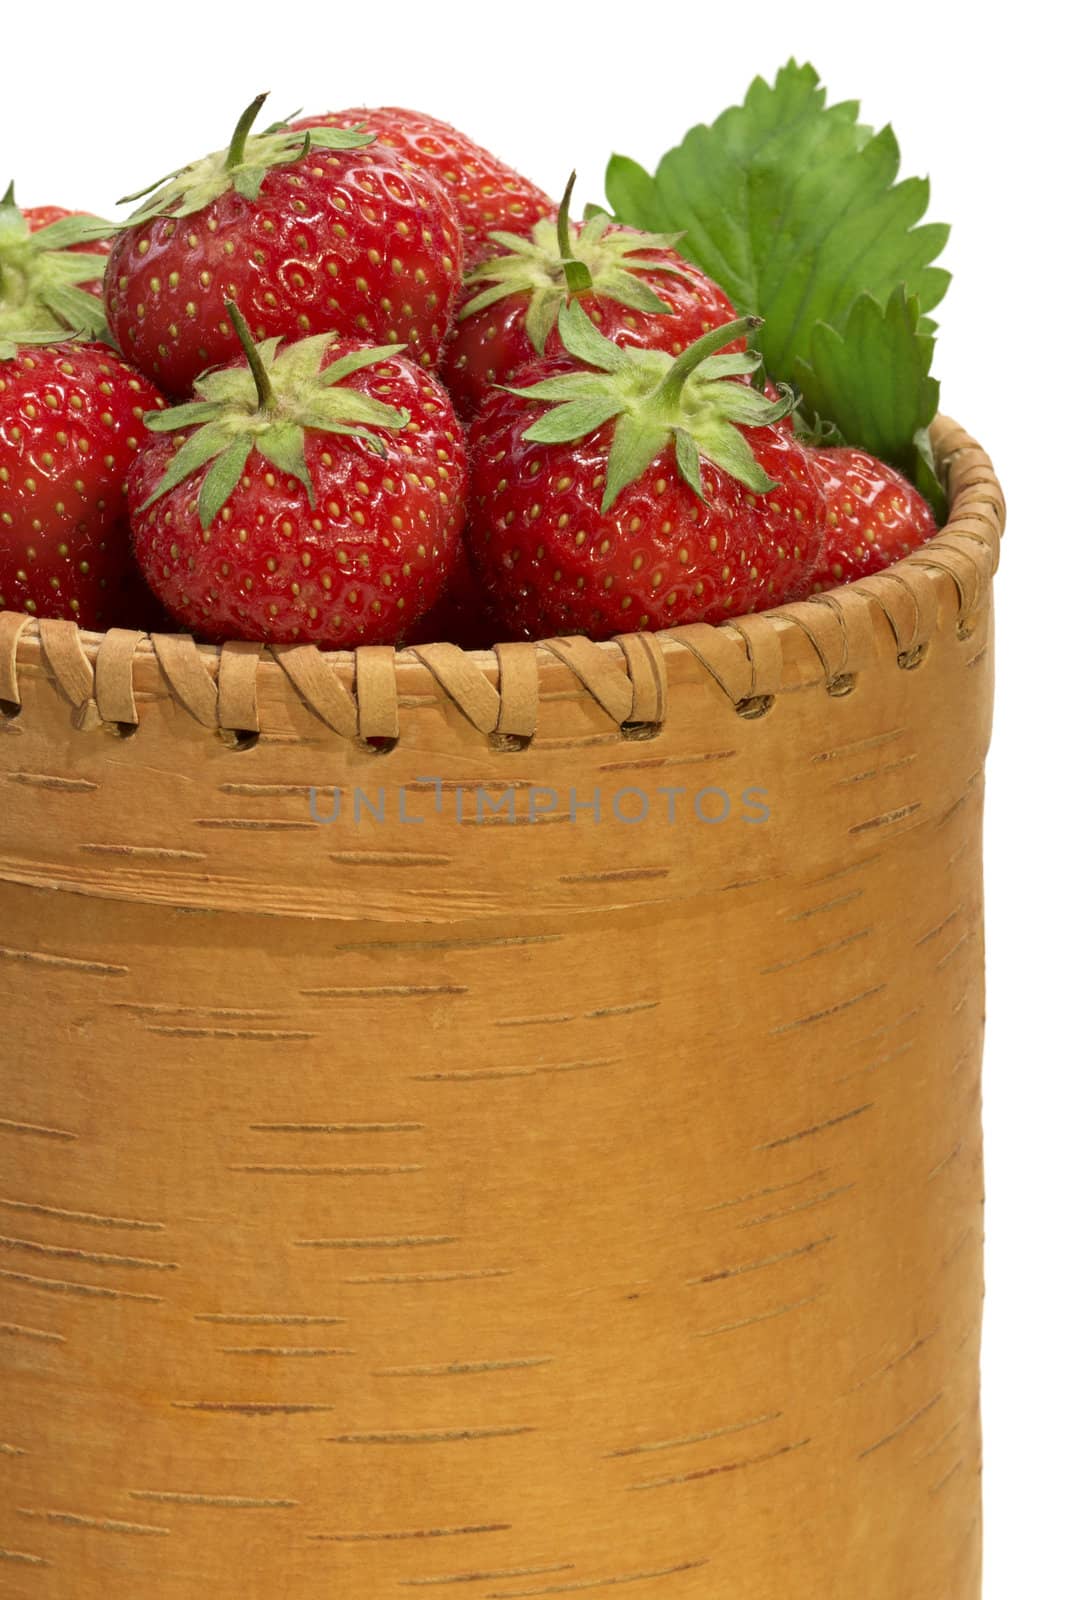 Strawberry in bark basket by Kamensky